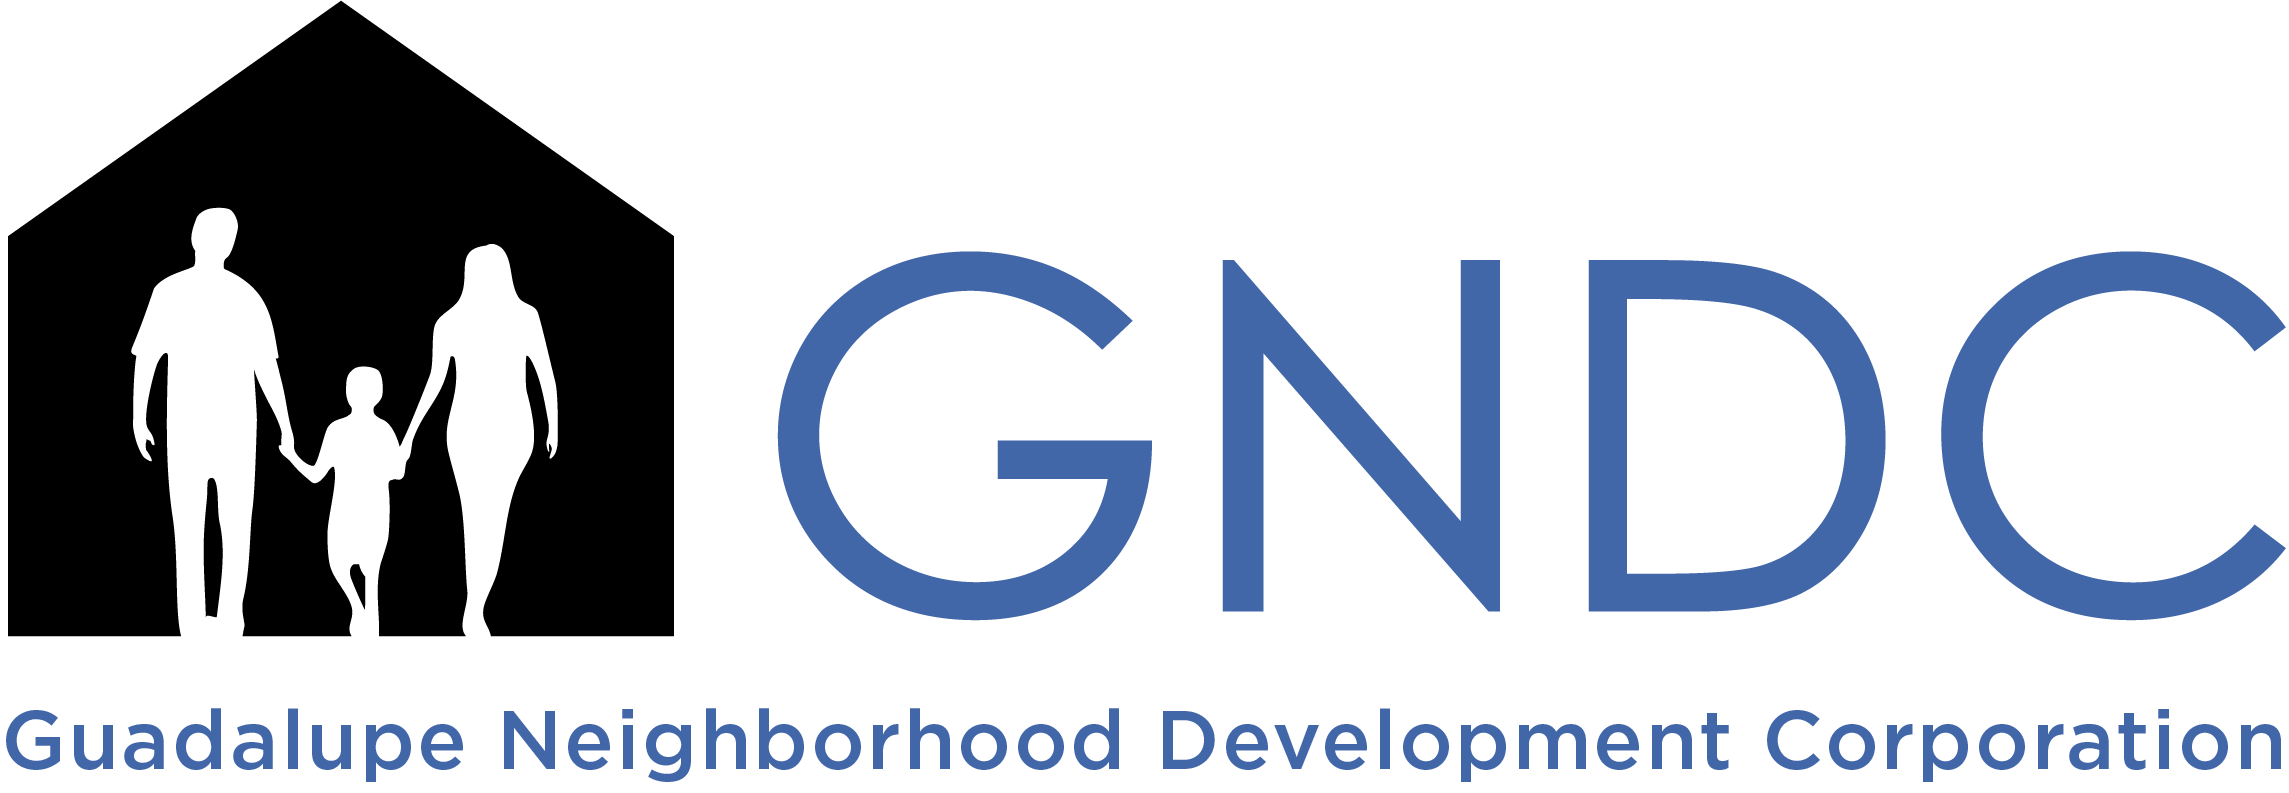 Guadalupe Neighborhood Development Corporation